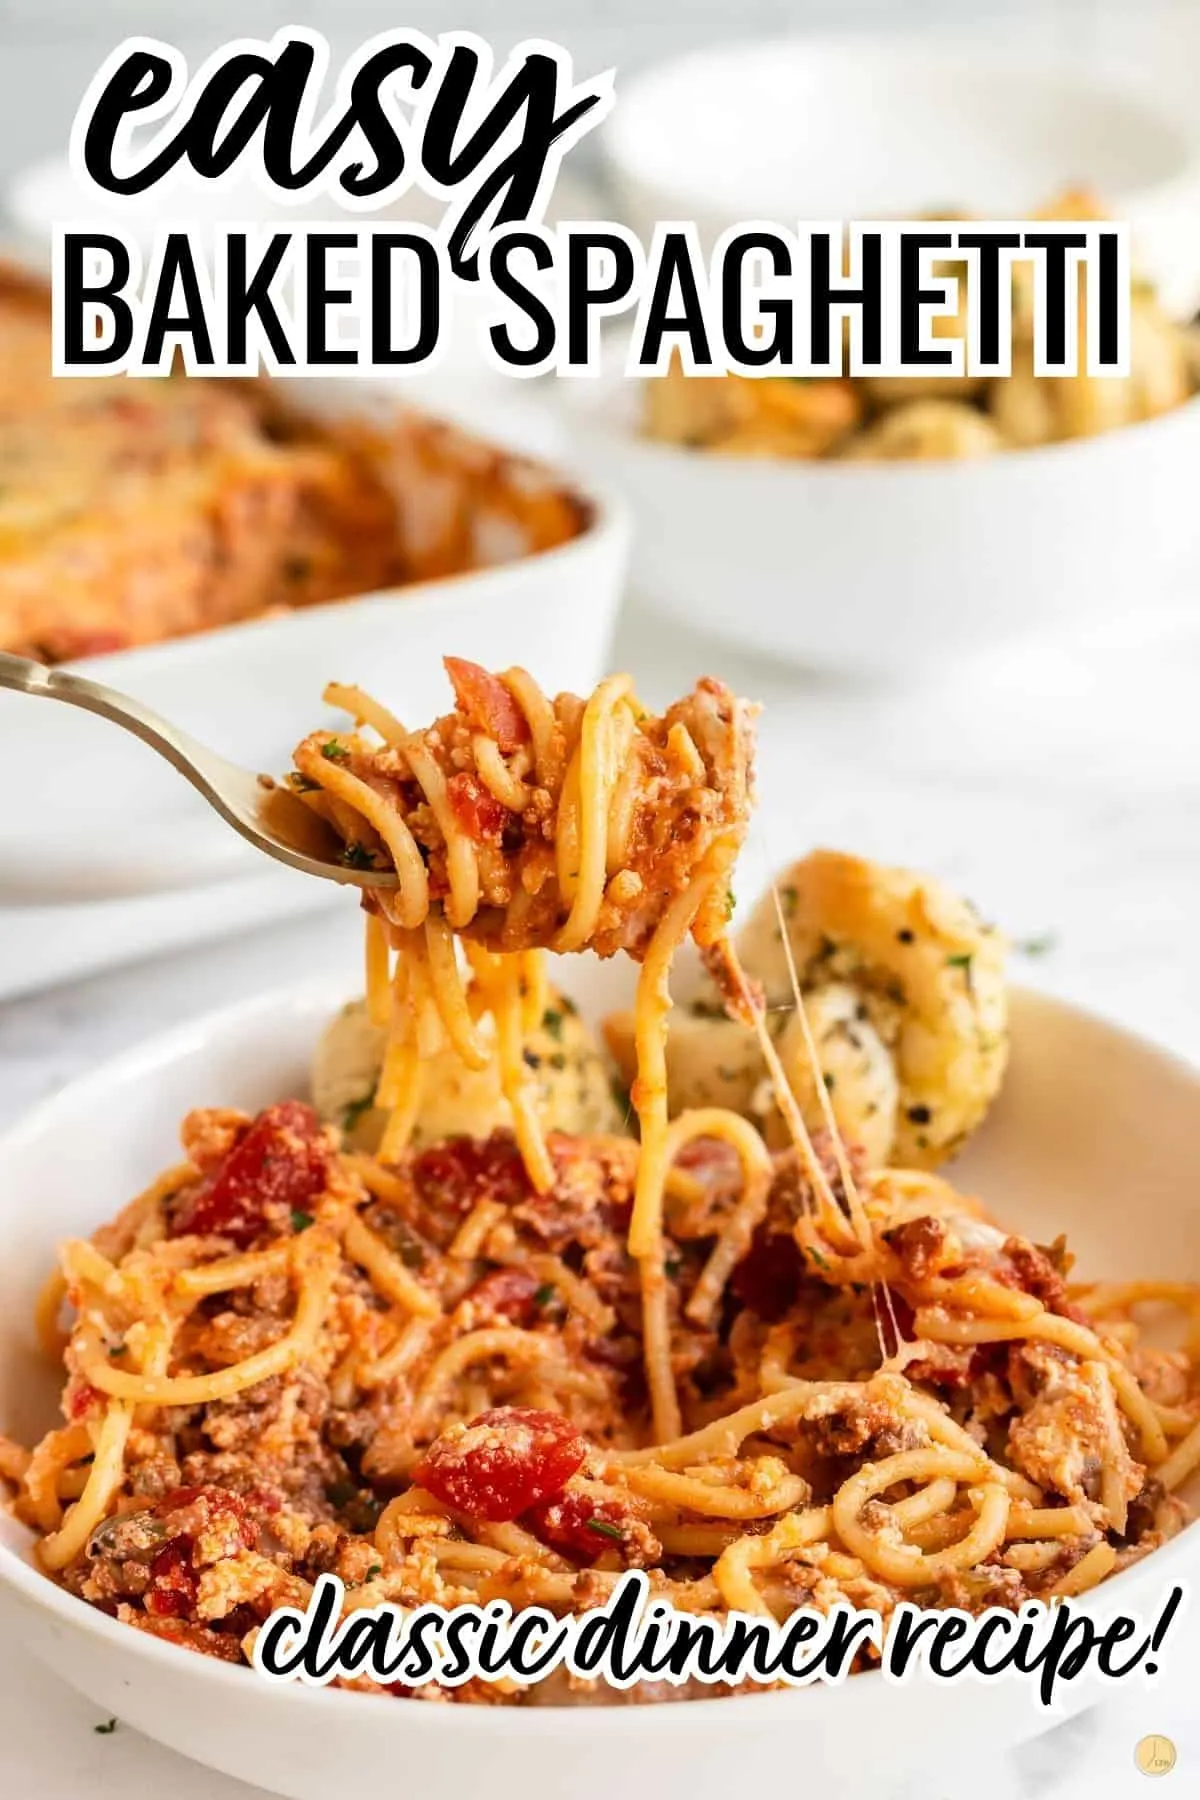 freezer meal of classic baked spaghetti casserole